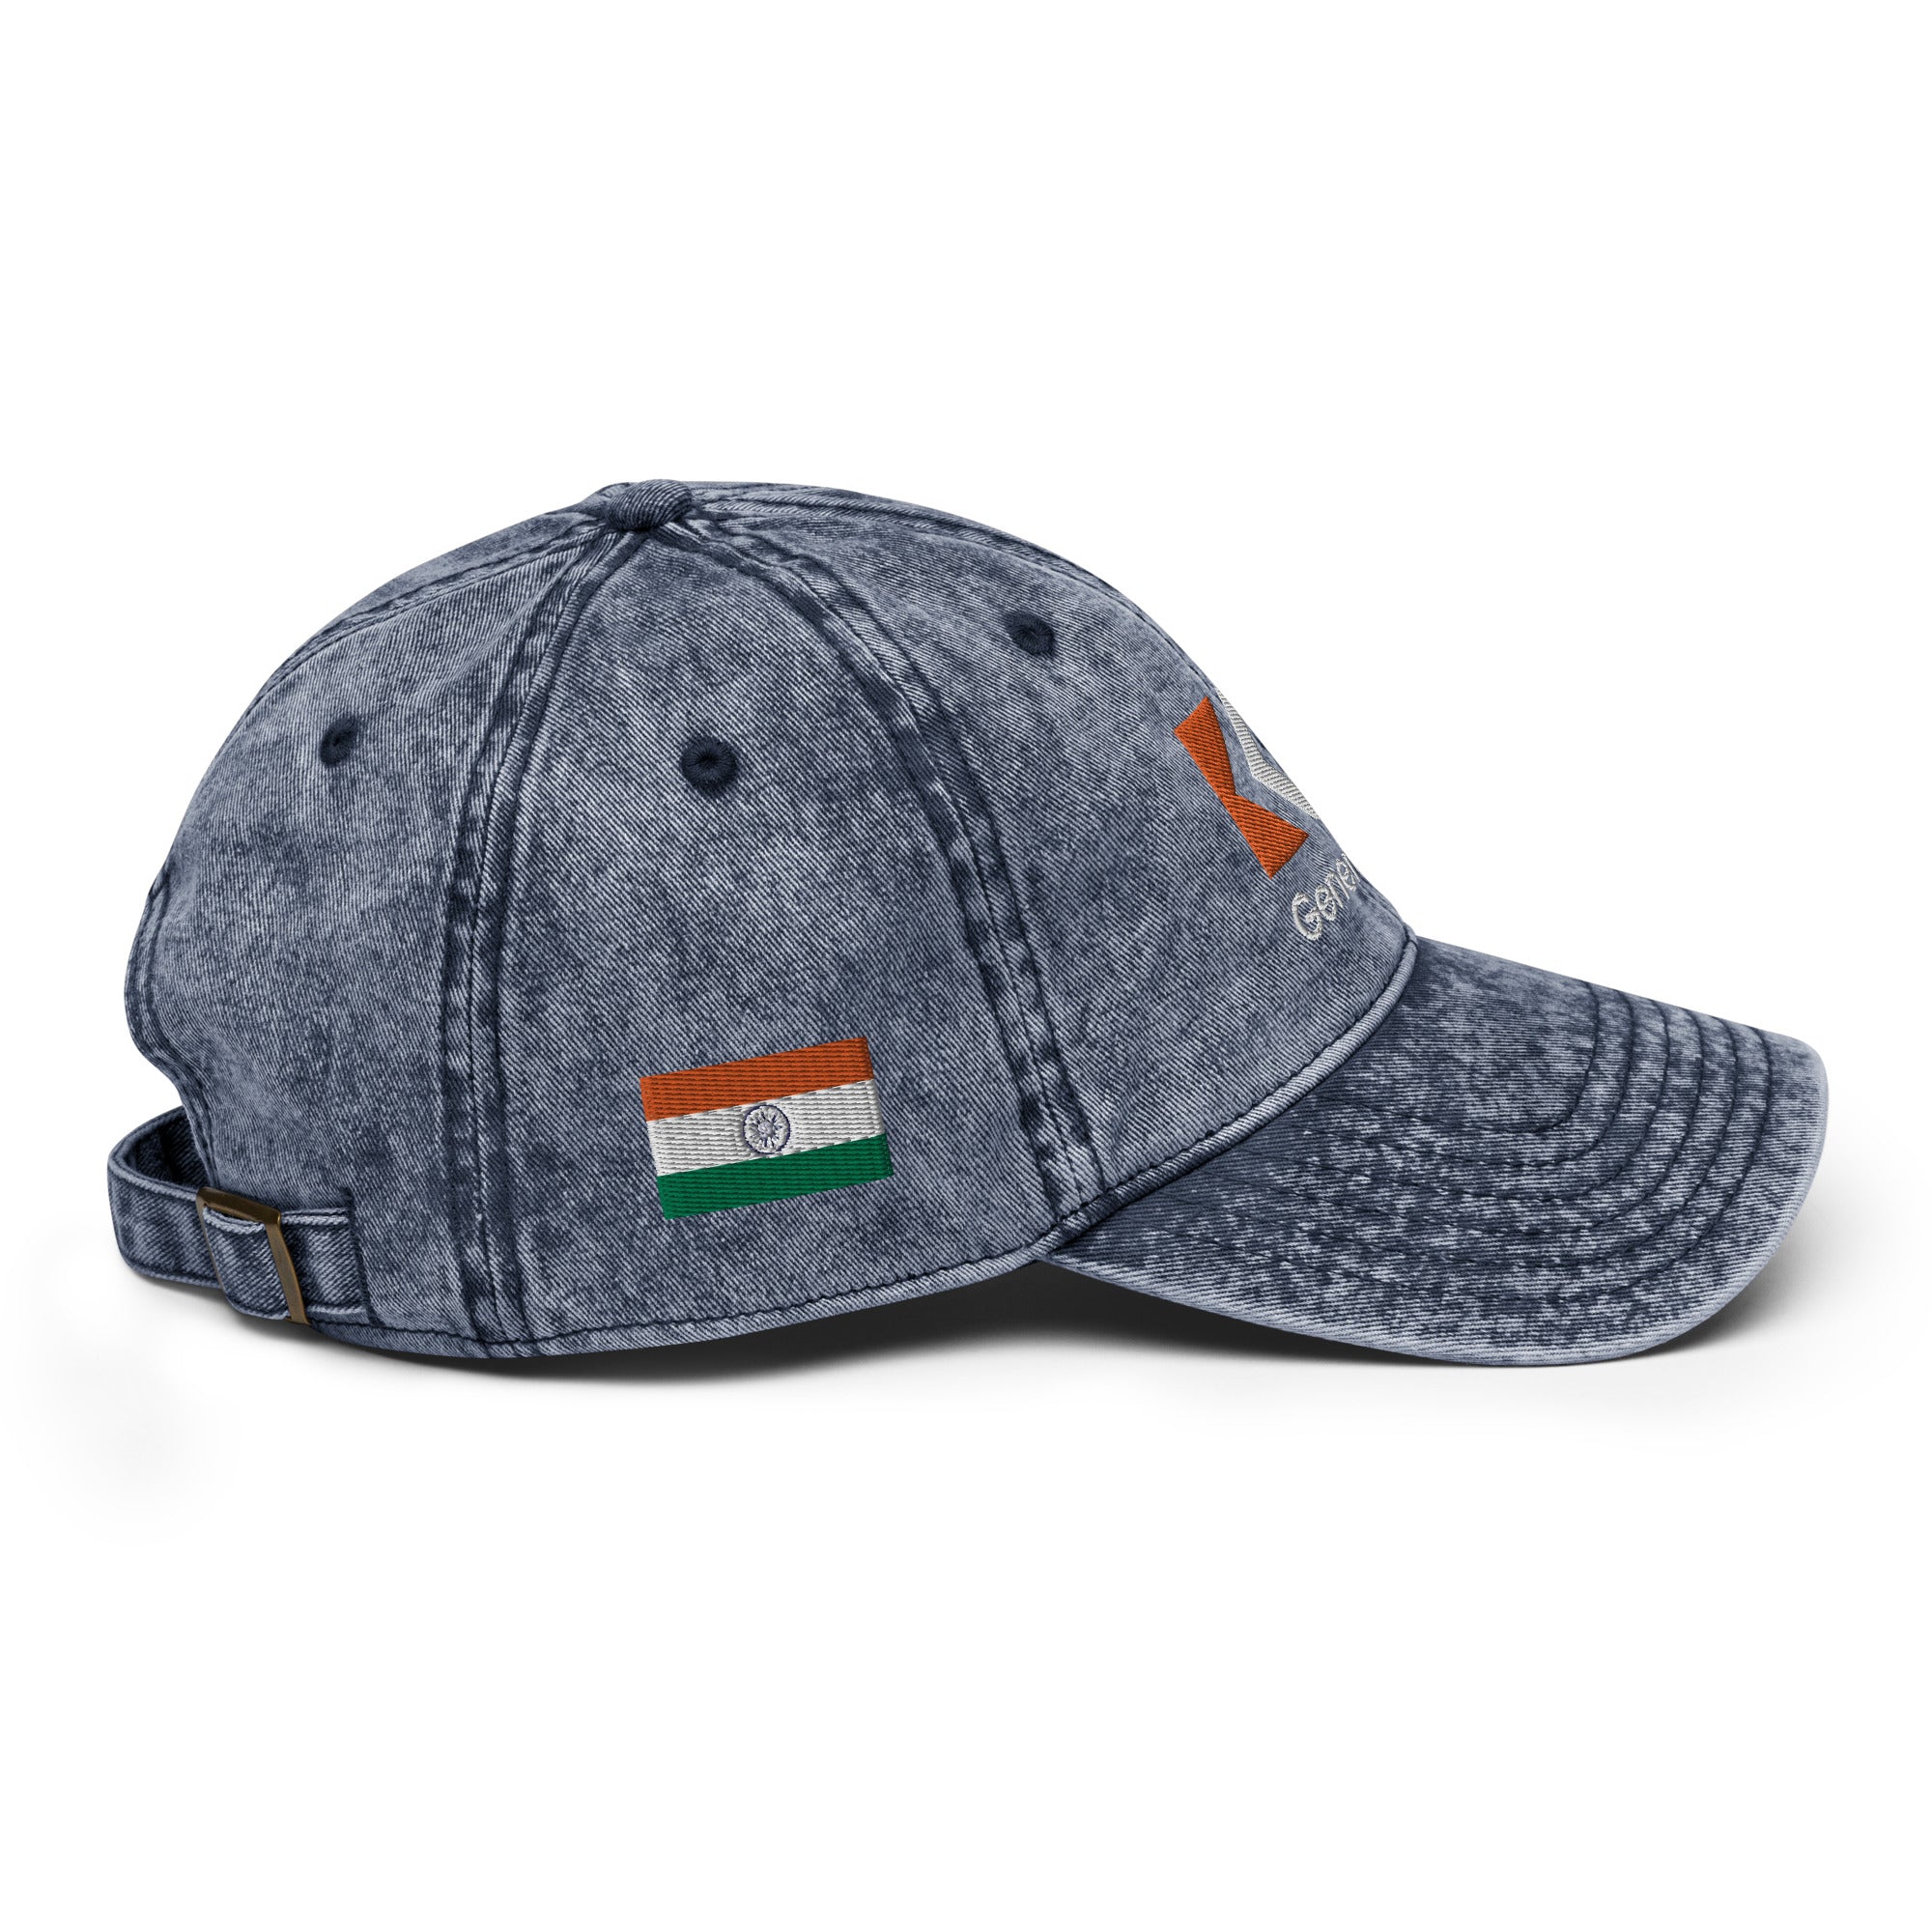 🇮🇳 India Vintage Cotton Twill Cap